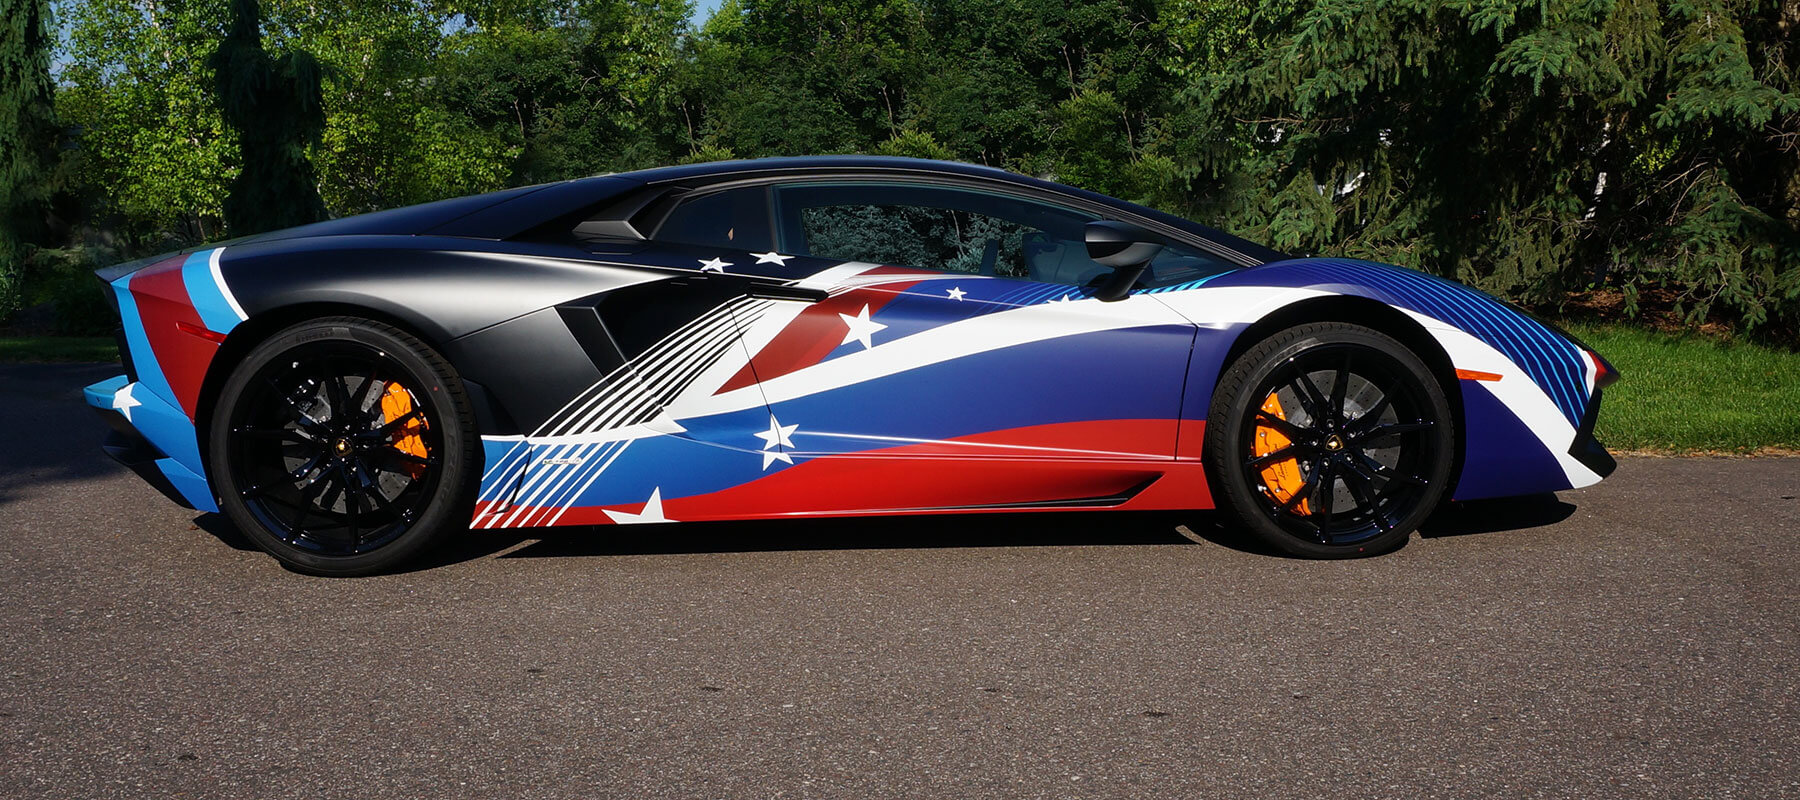 Lamborghini with a patriotic vehicle wrap